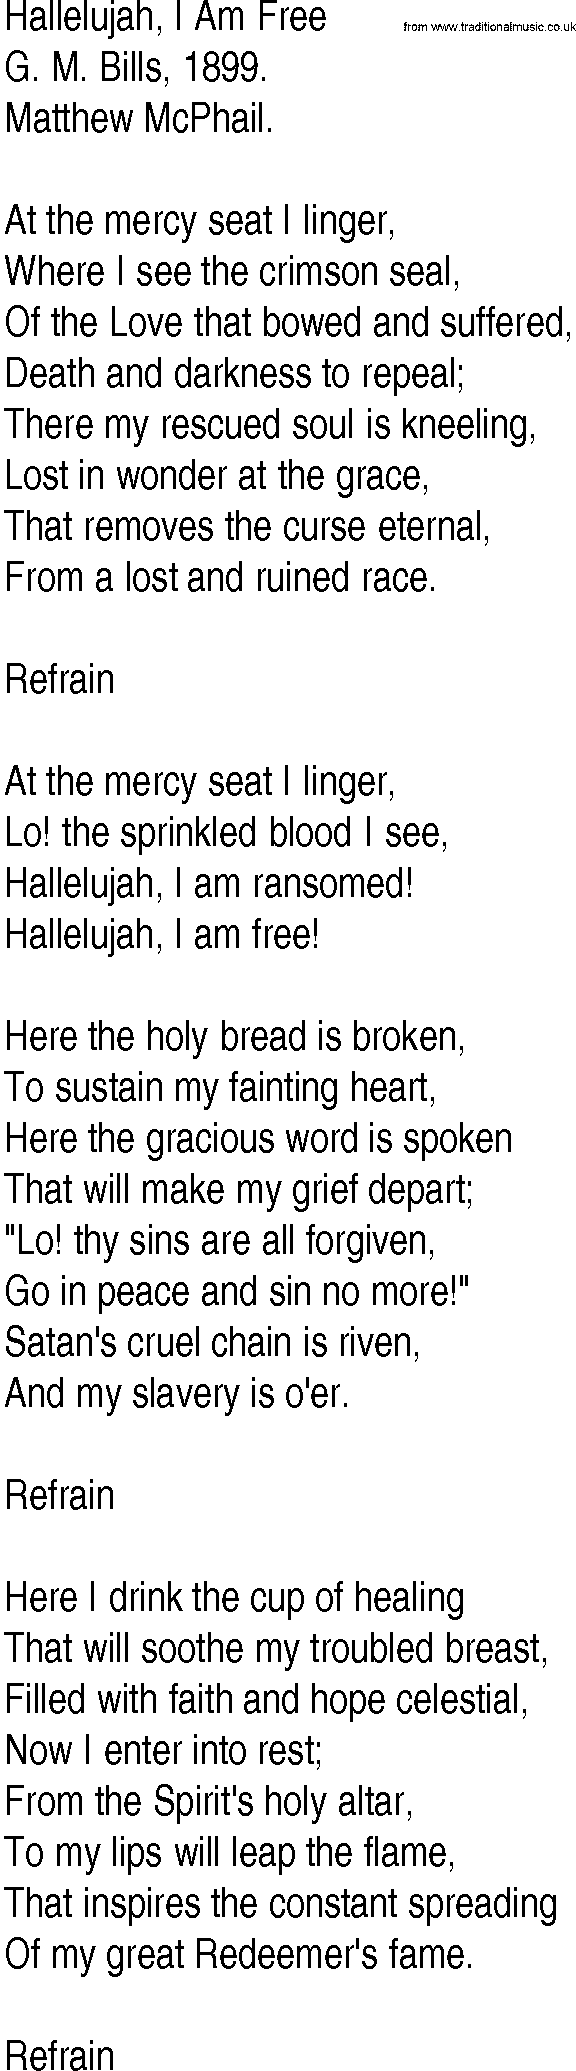 Hymn and Gospel Song: Hallelujah, I Am Free by G M Bills lyrics